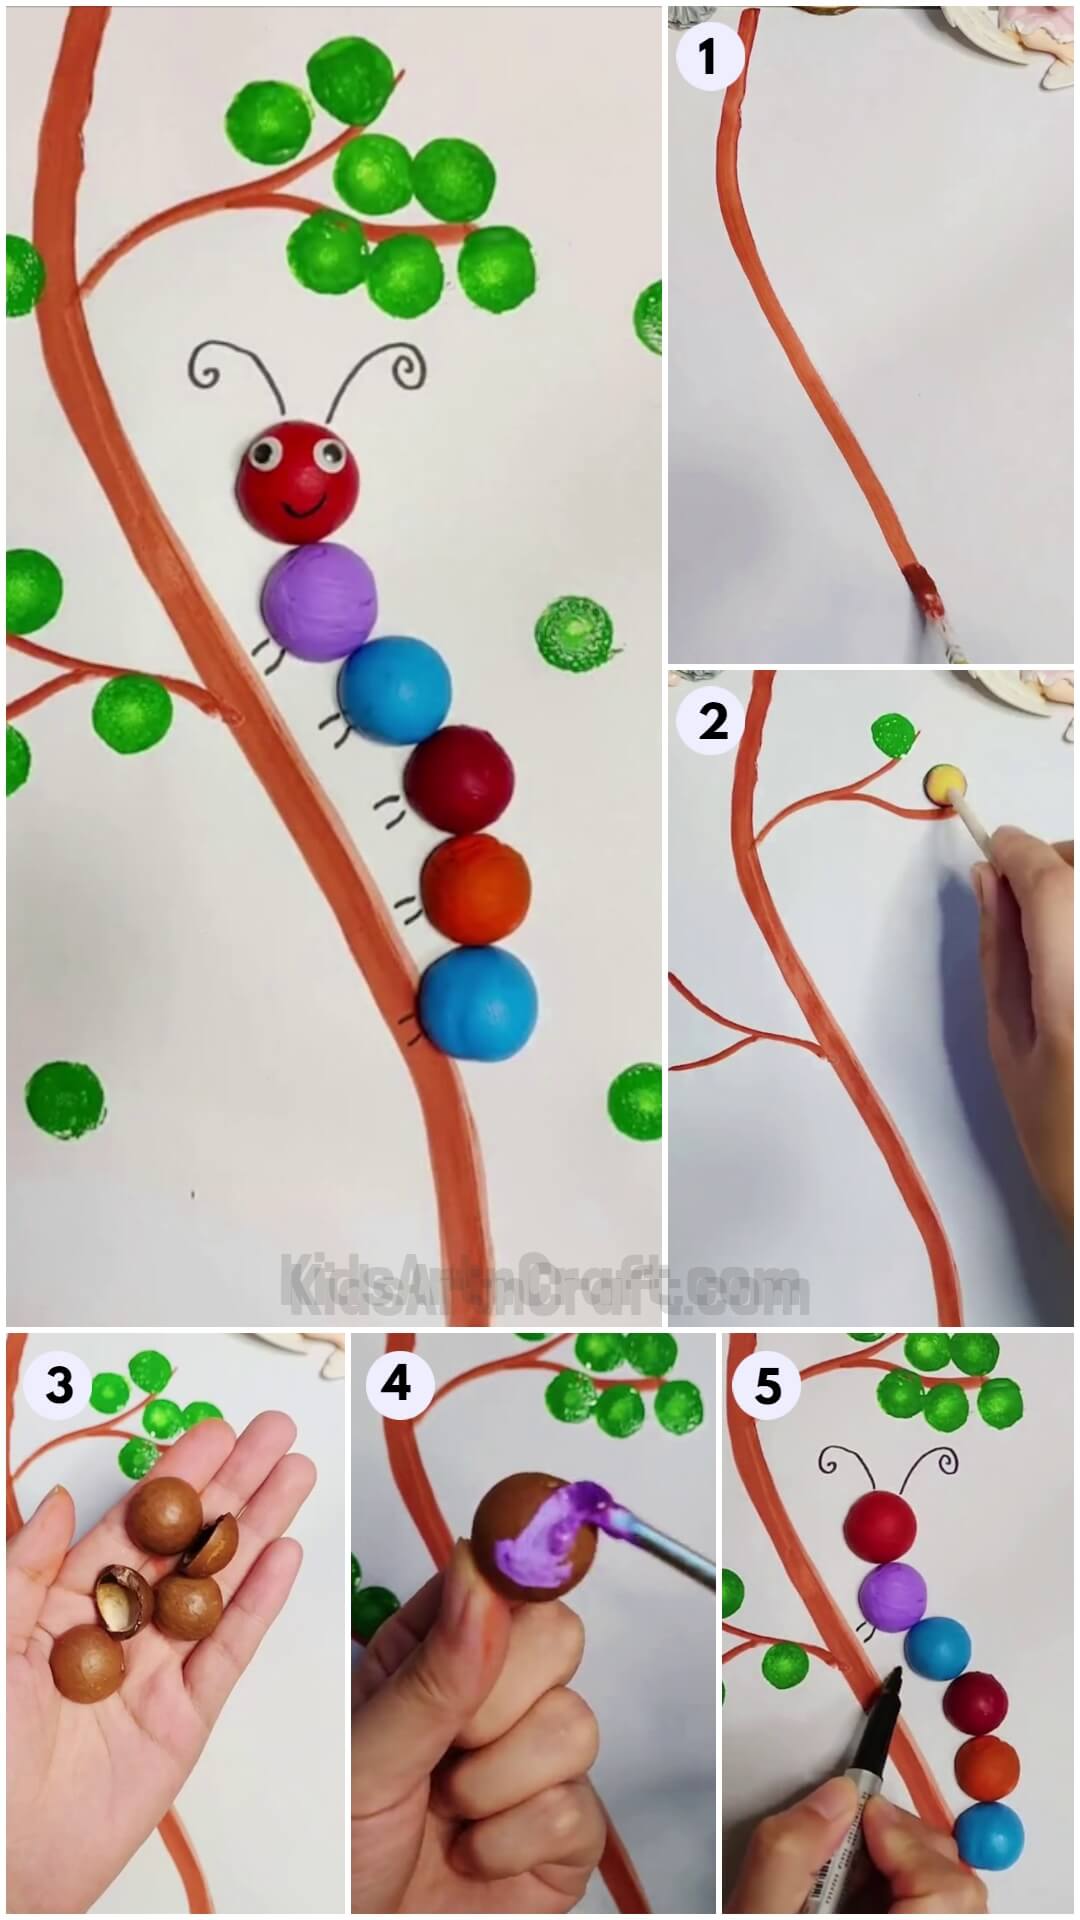 Macadamia Nutshell Caterpillar Artwork Craft For Beginners